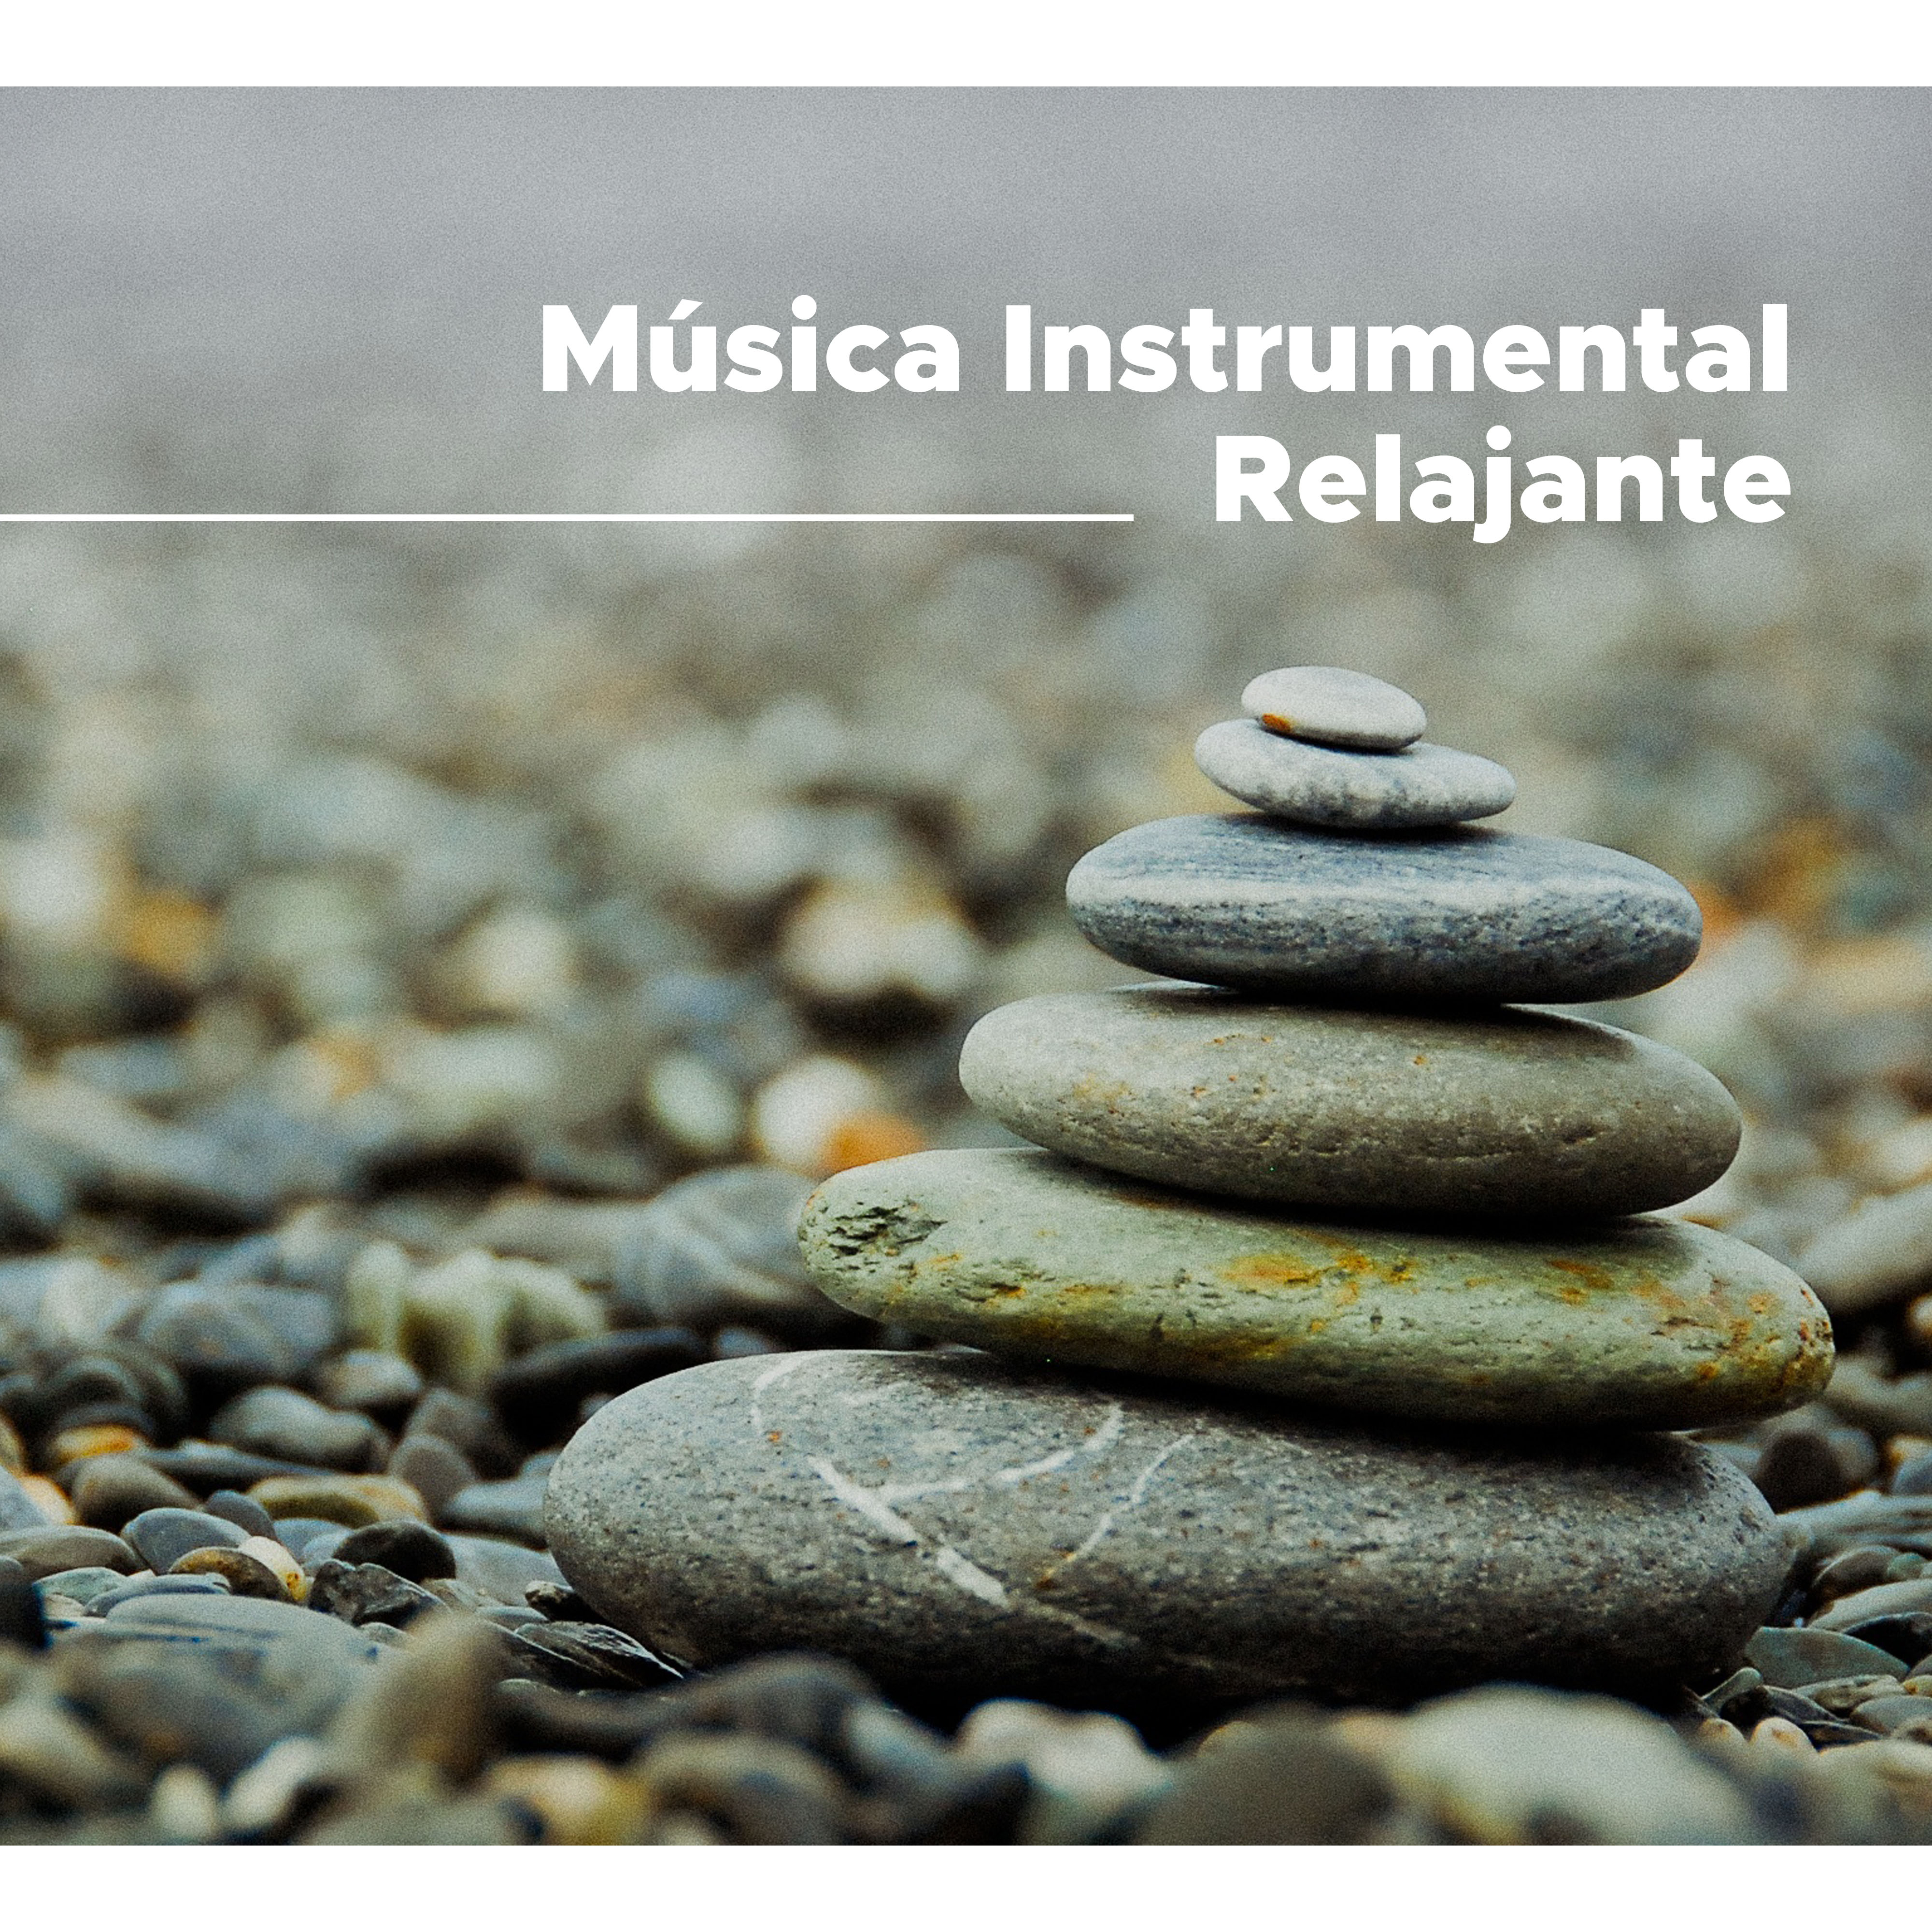 Musica Instrumental Relajante